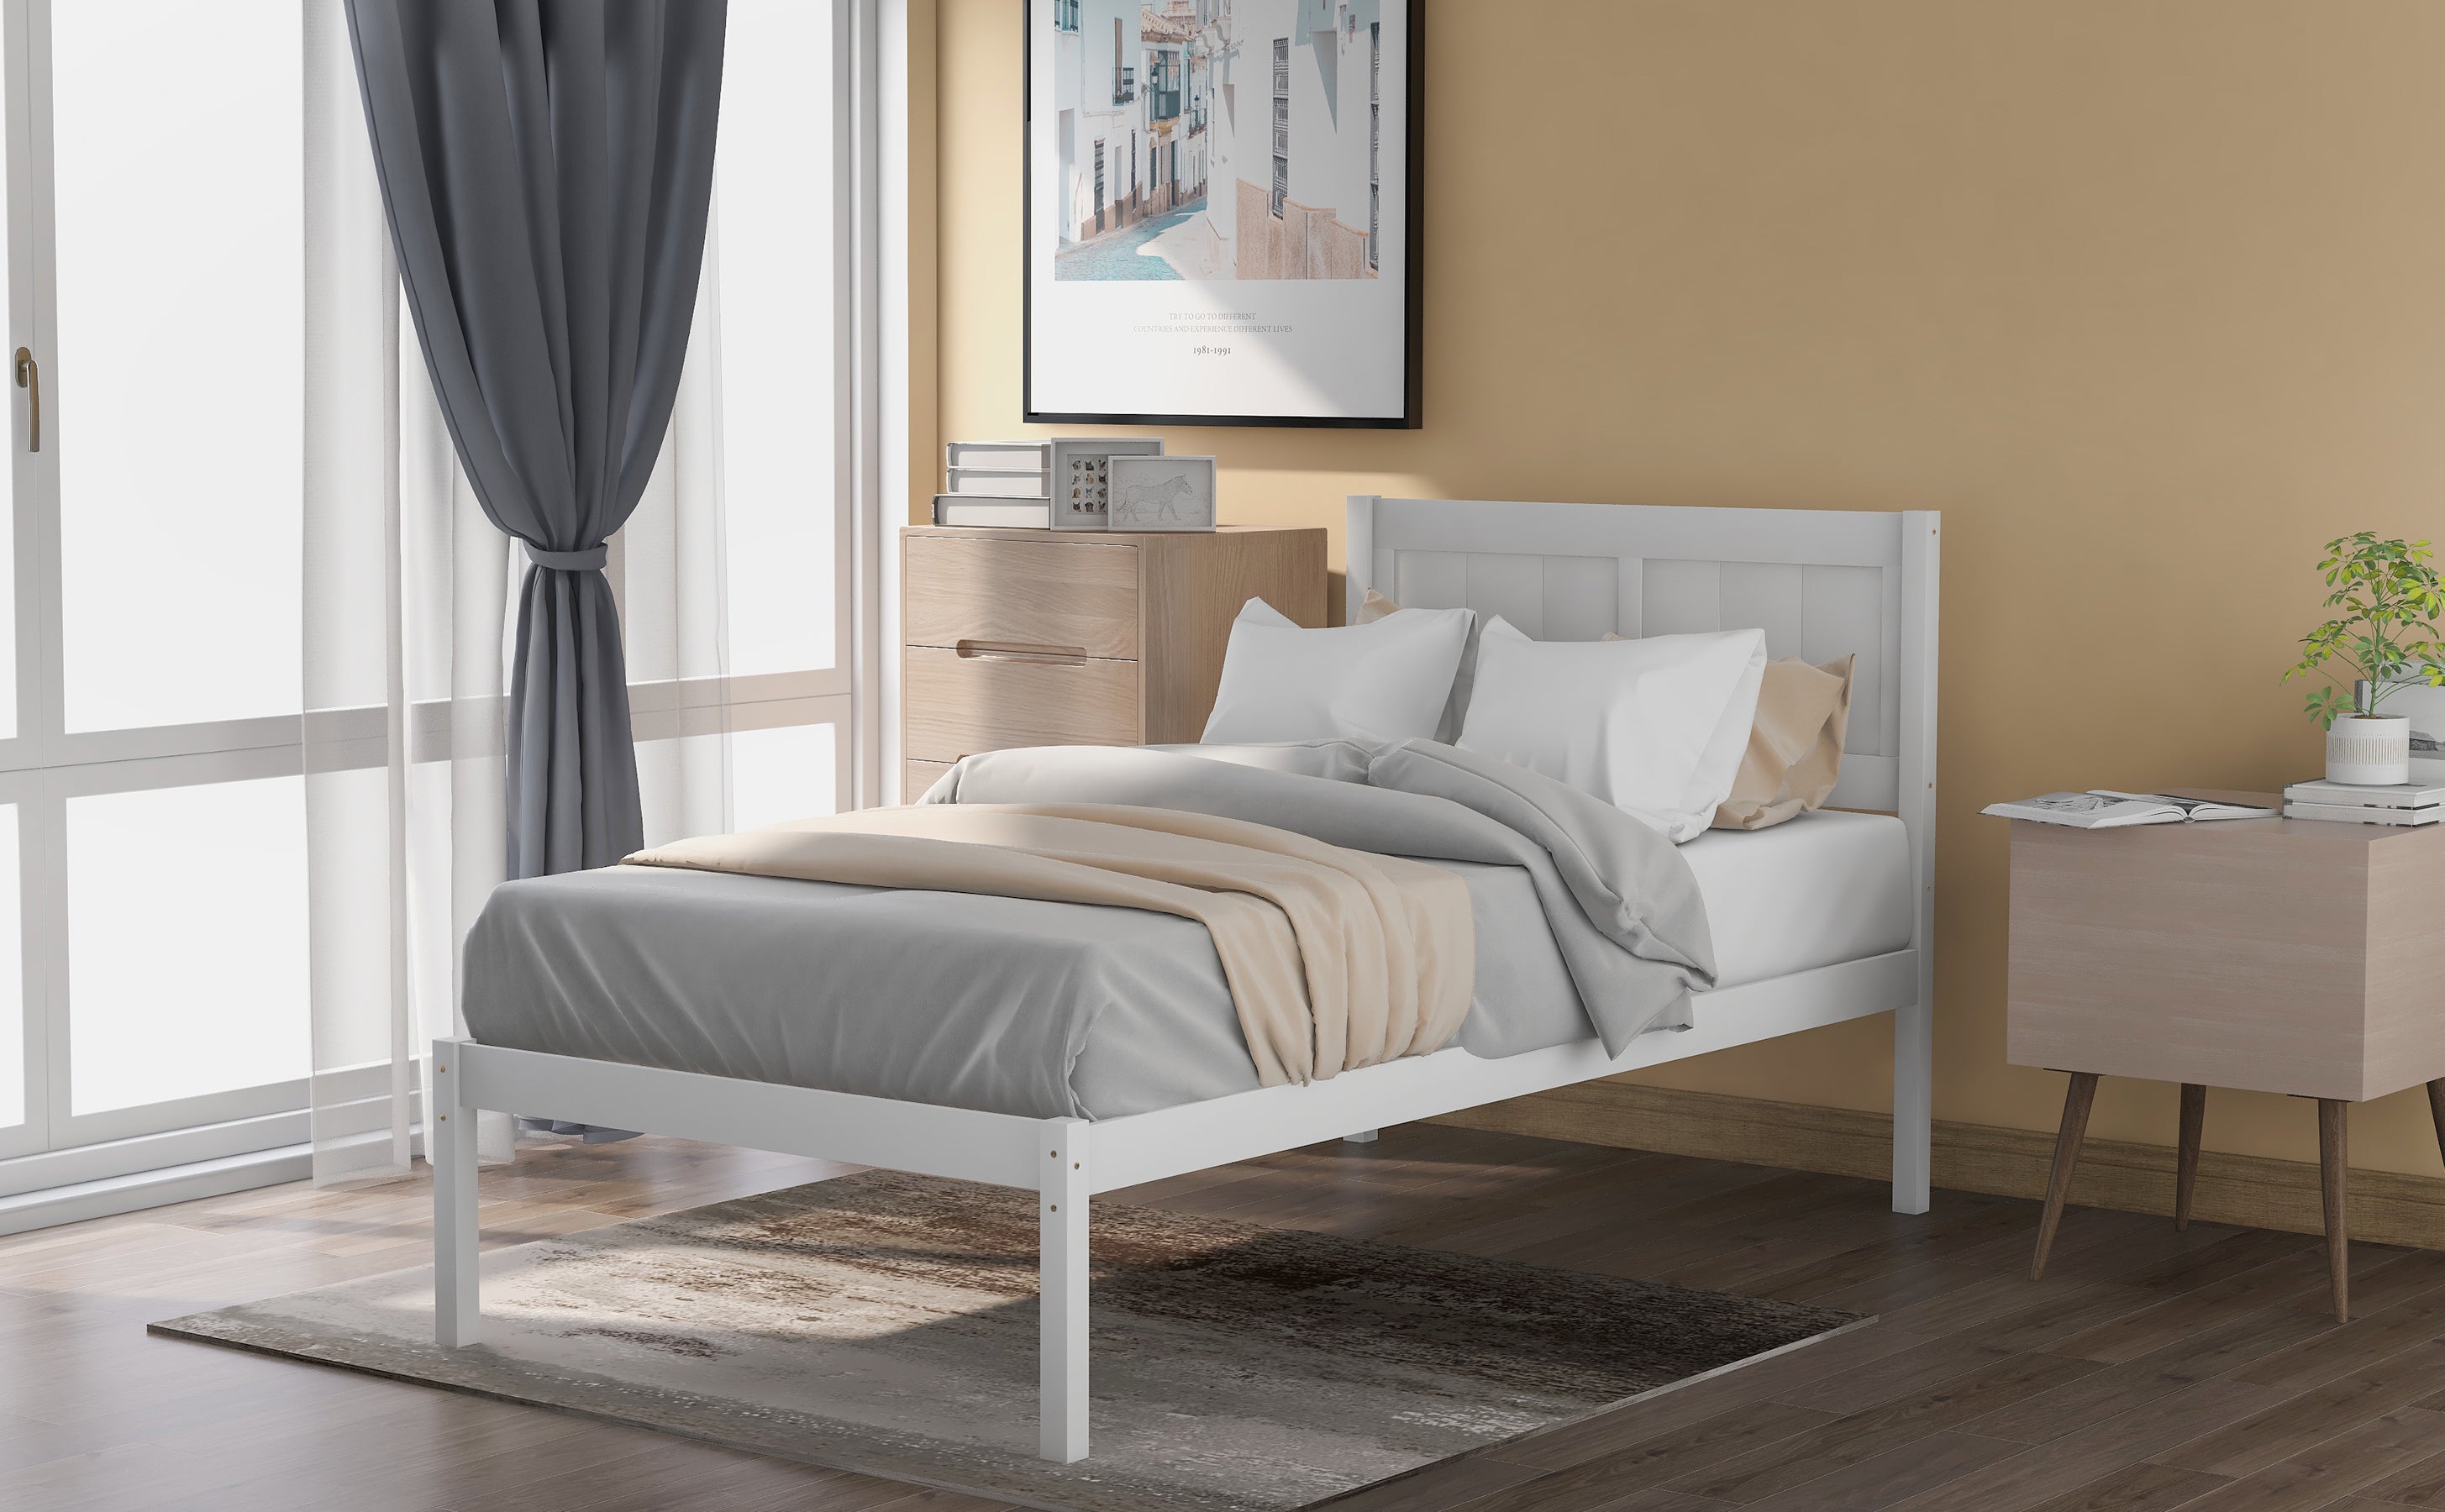 Wood Platform Twin Size Platform Bed with Headboard - White